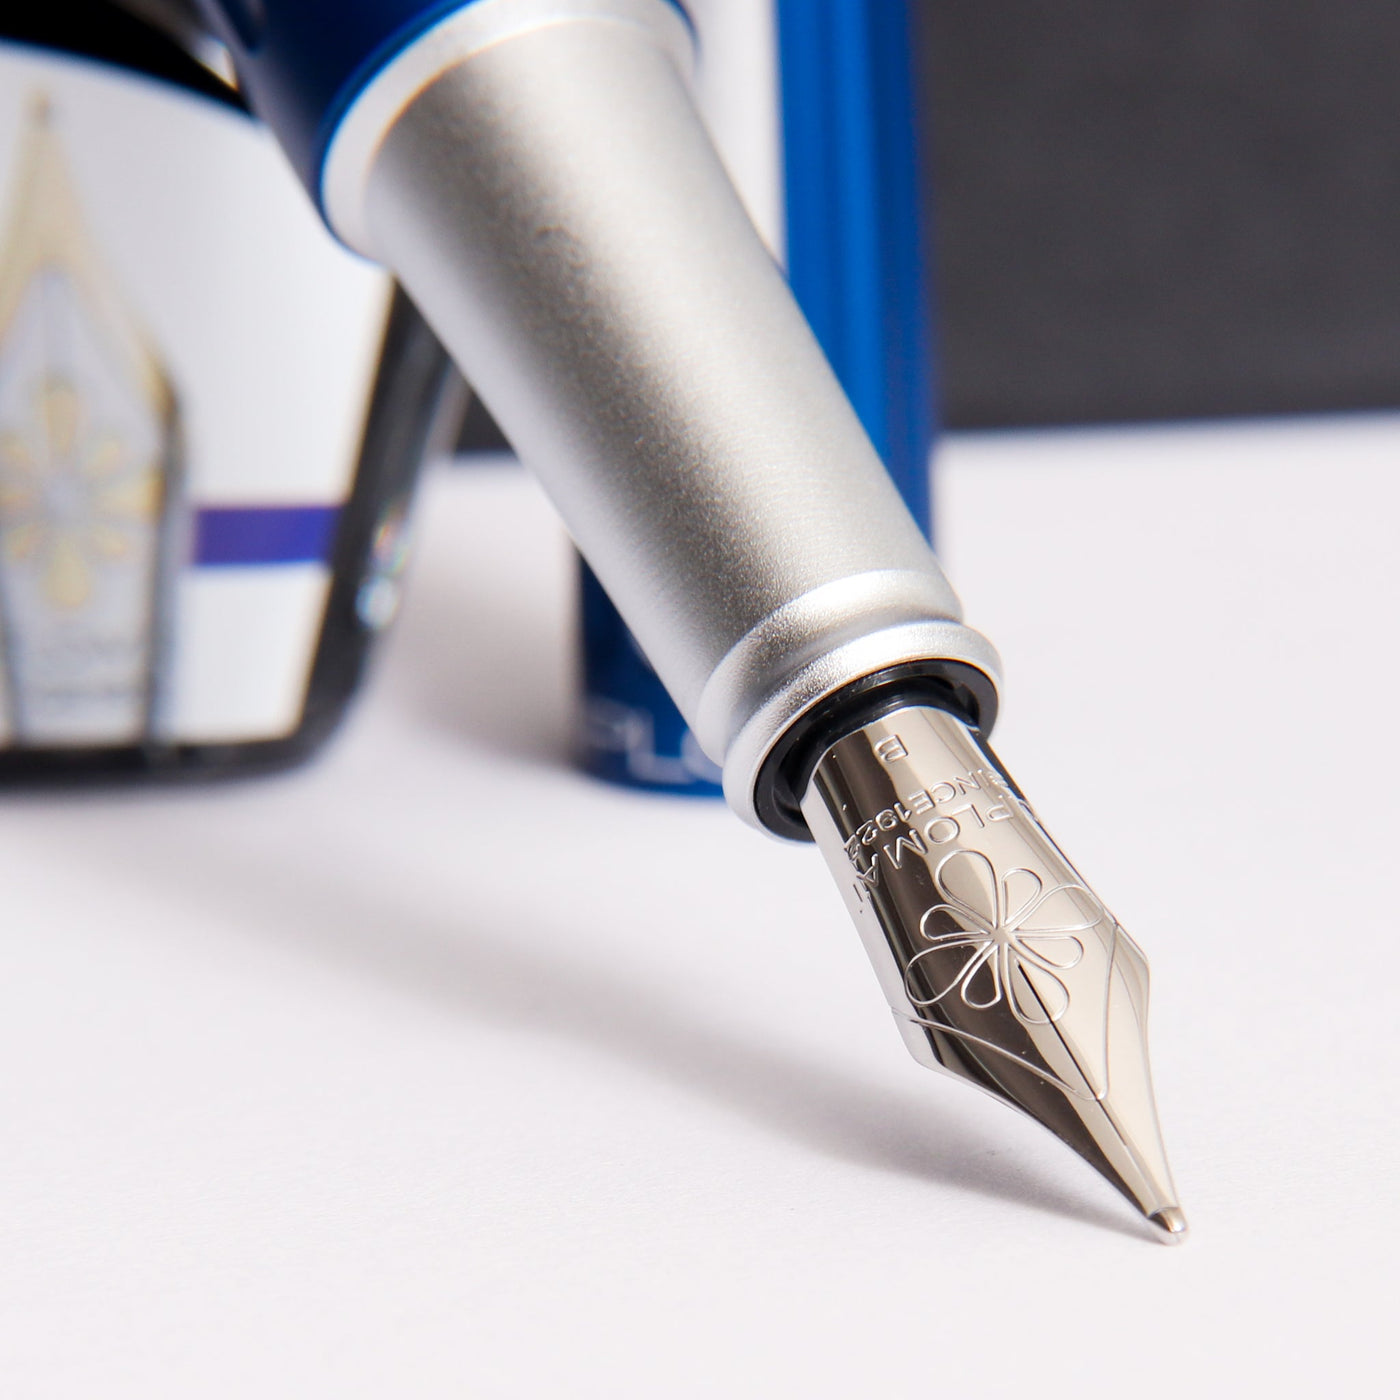 Diplomat-Aero-Blue-Fountain-Pen-Gift-Set-Nib-Details